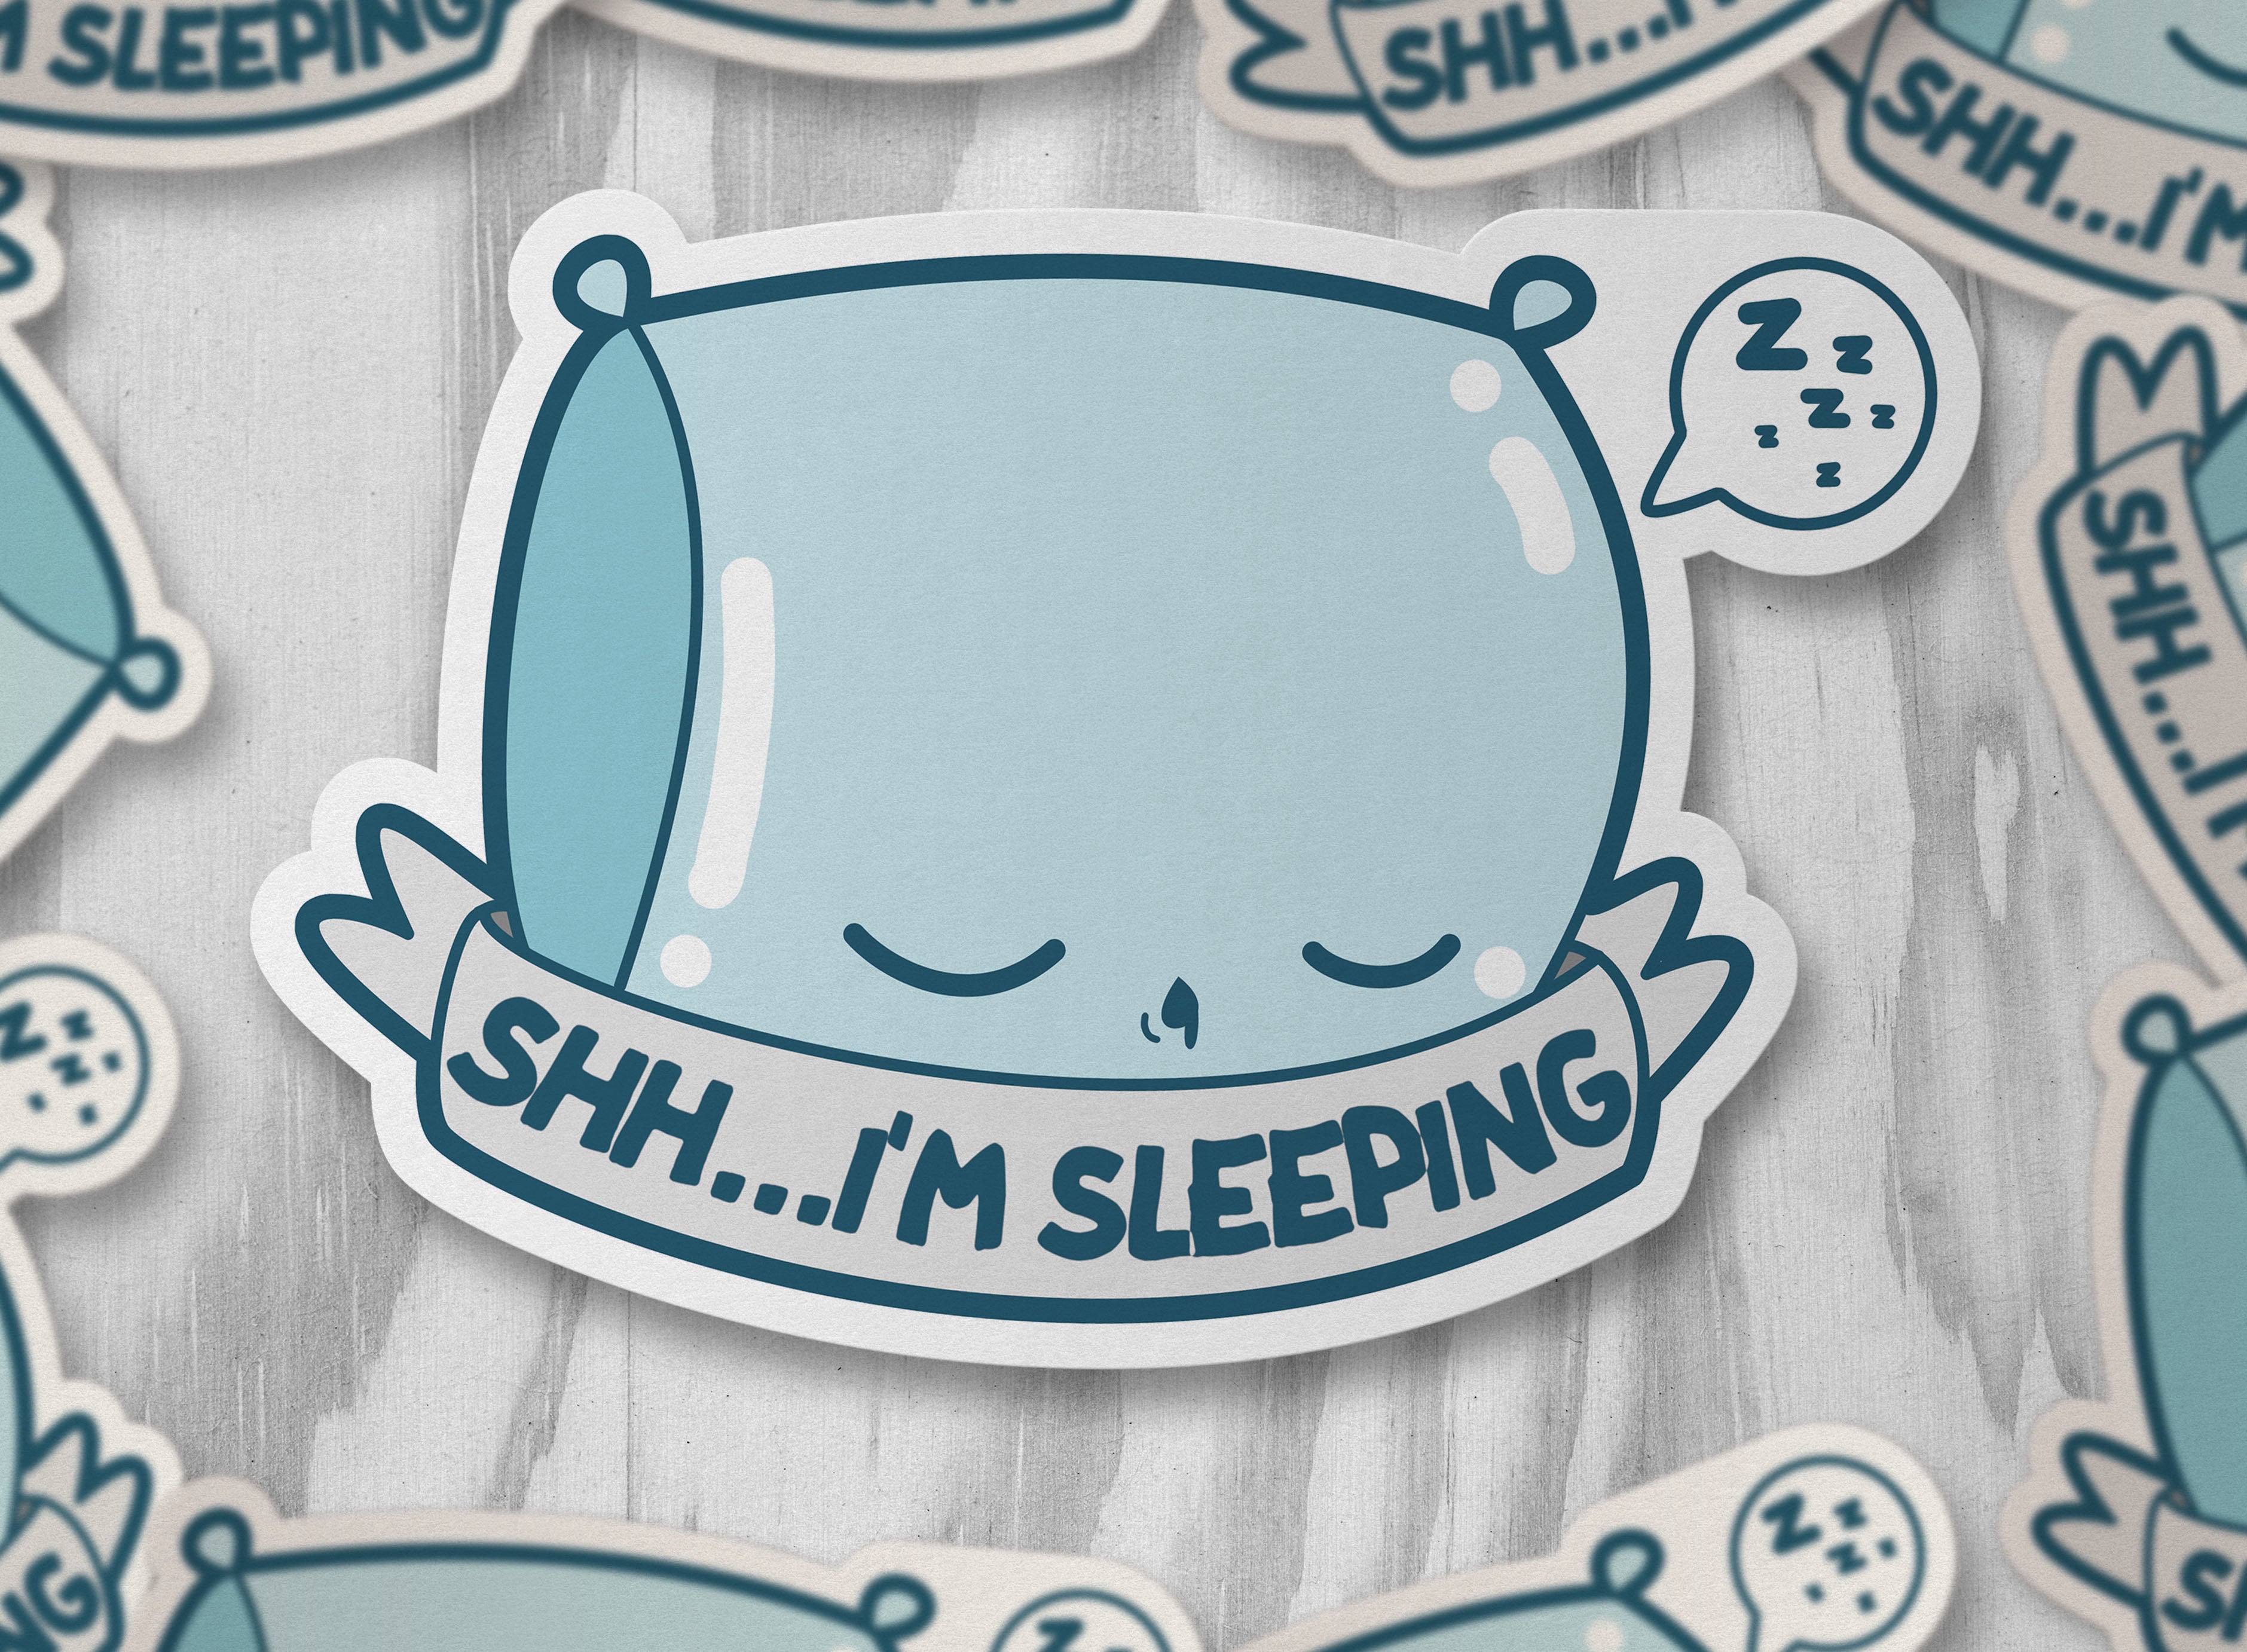 Shh...I'm Sleeping - ChubbleGumLLC